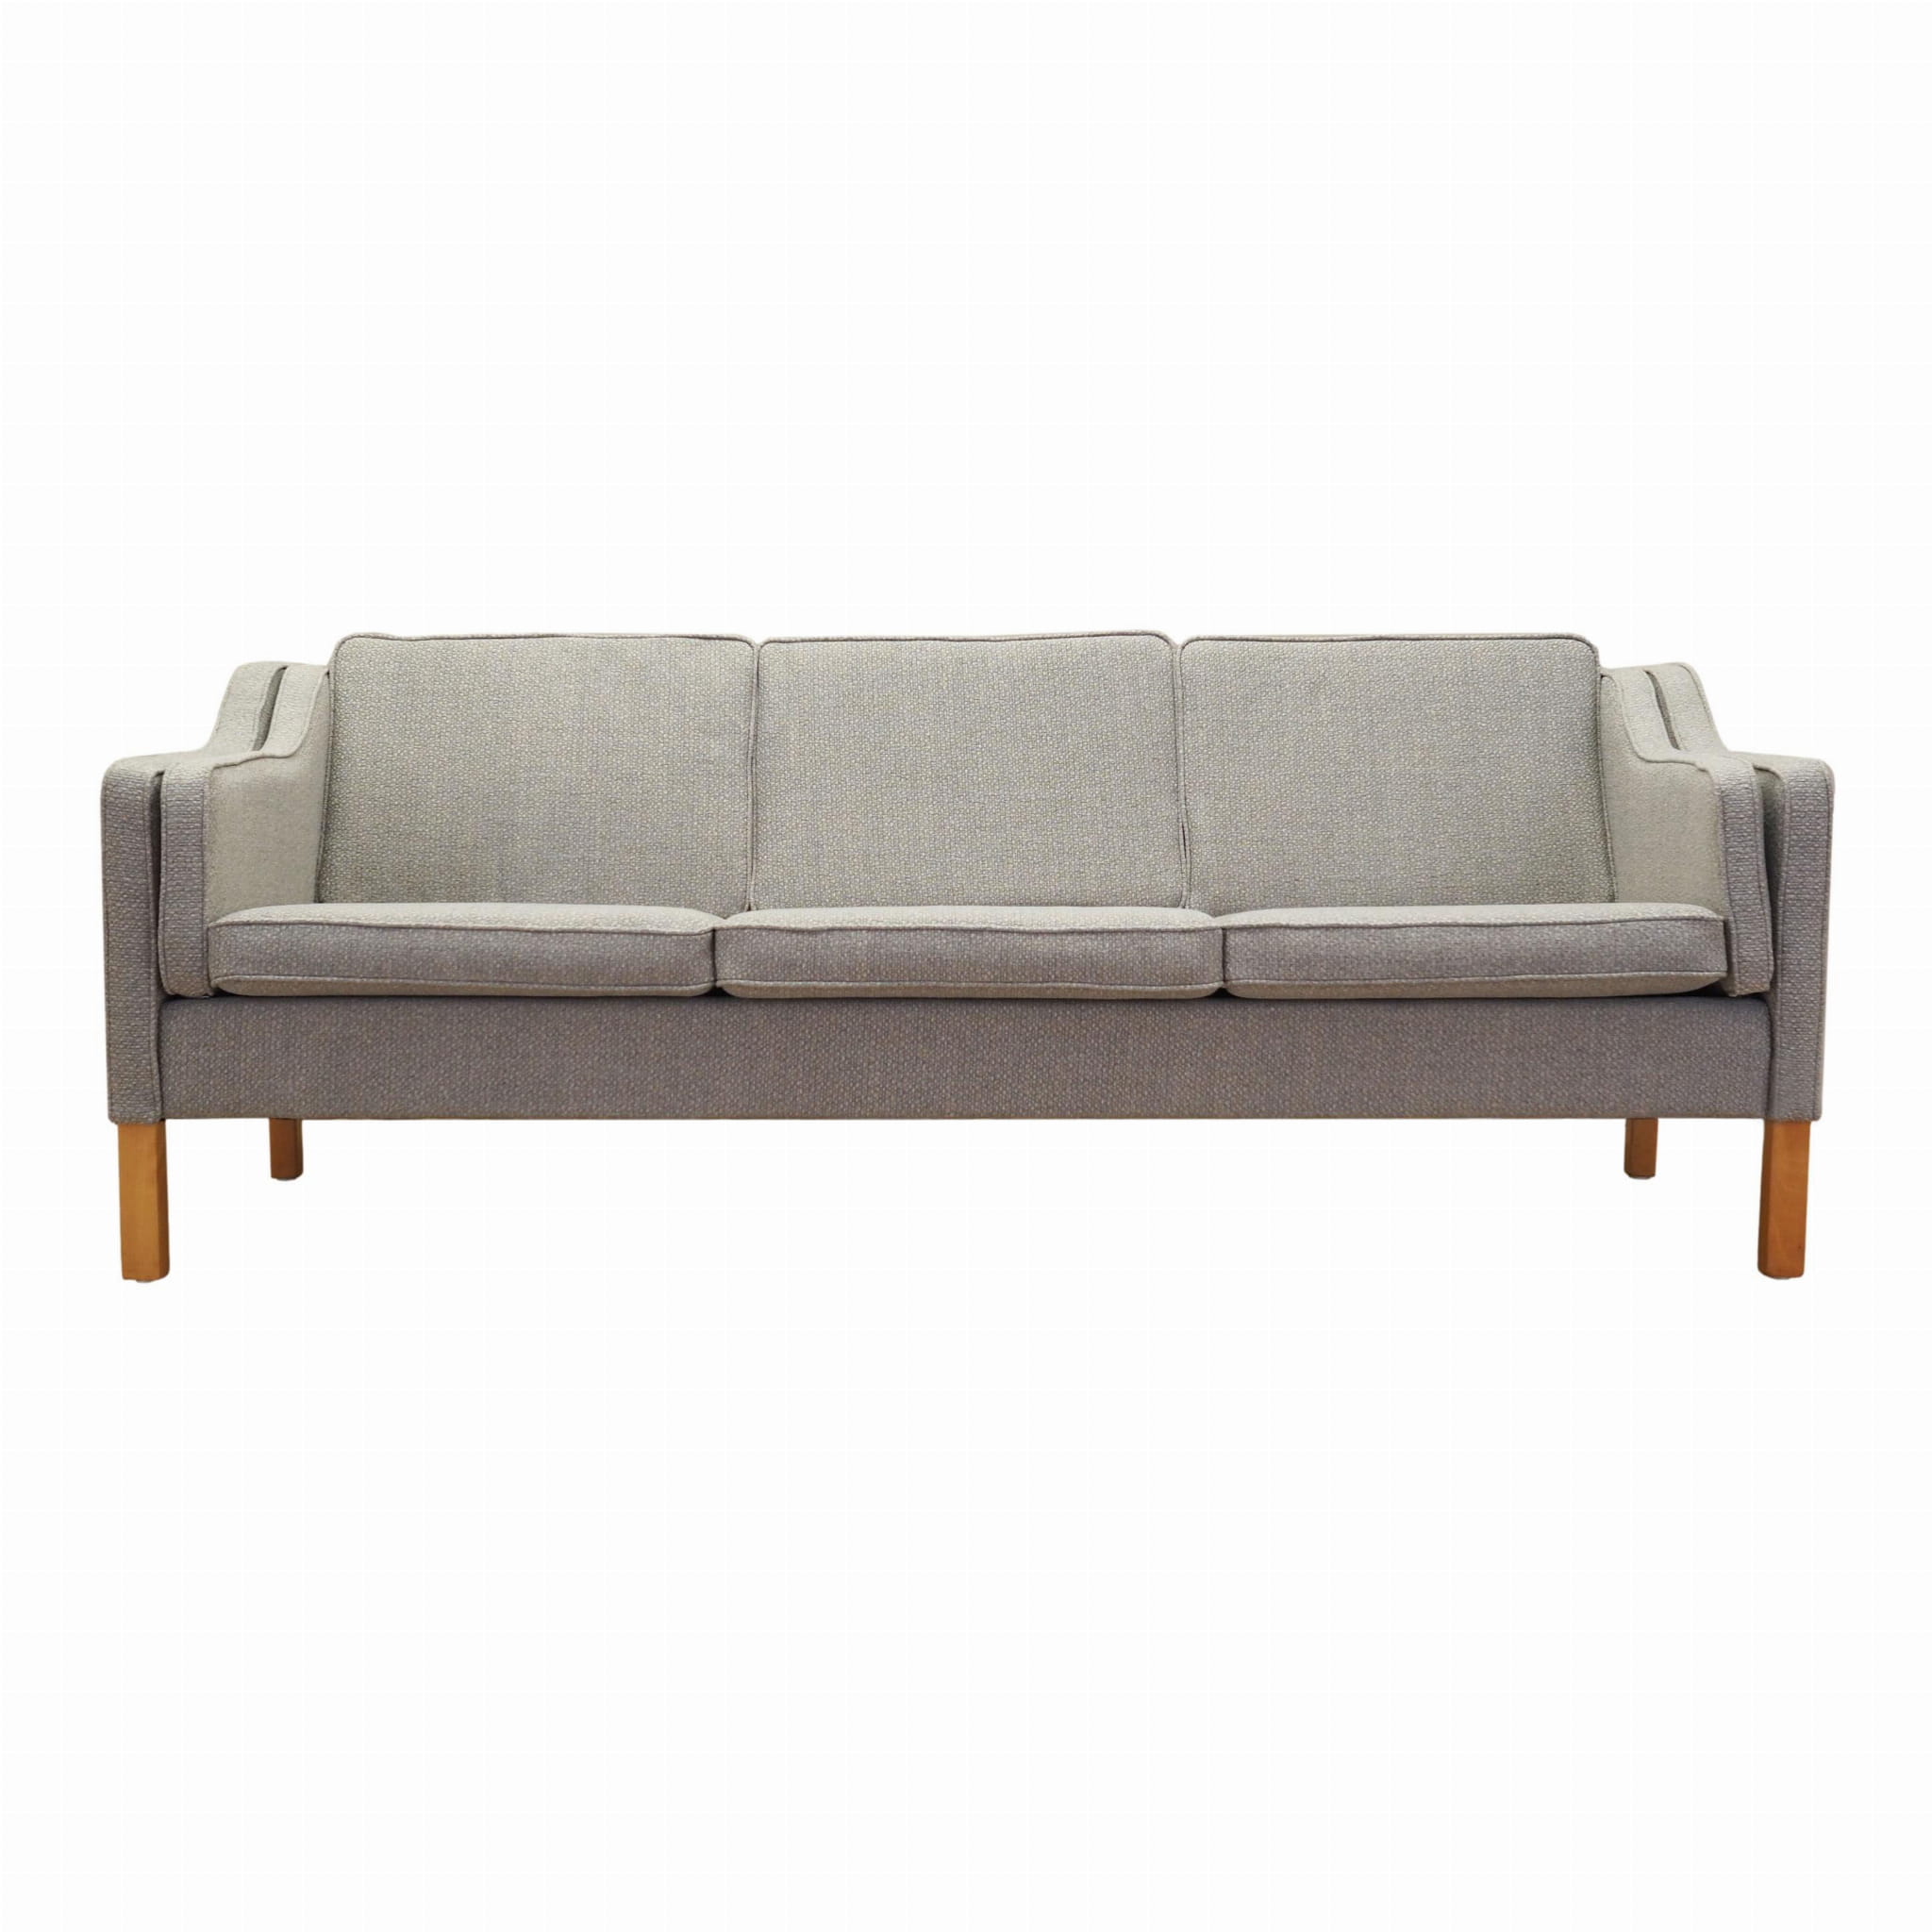 Vintage Sofa 3-Sitzer Buchenholz Textil Grau 1970er Jahre